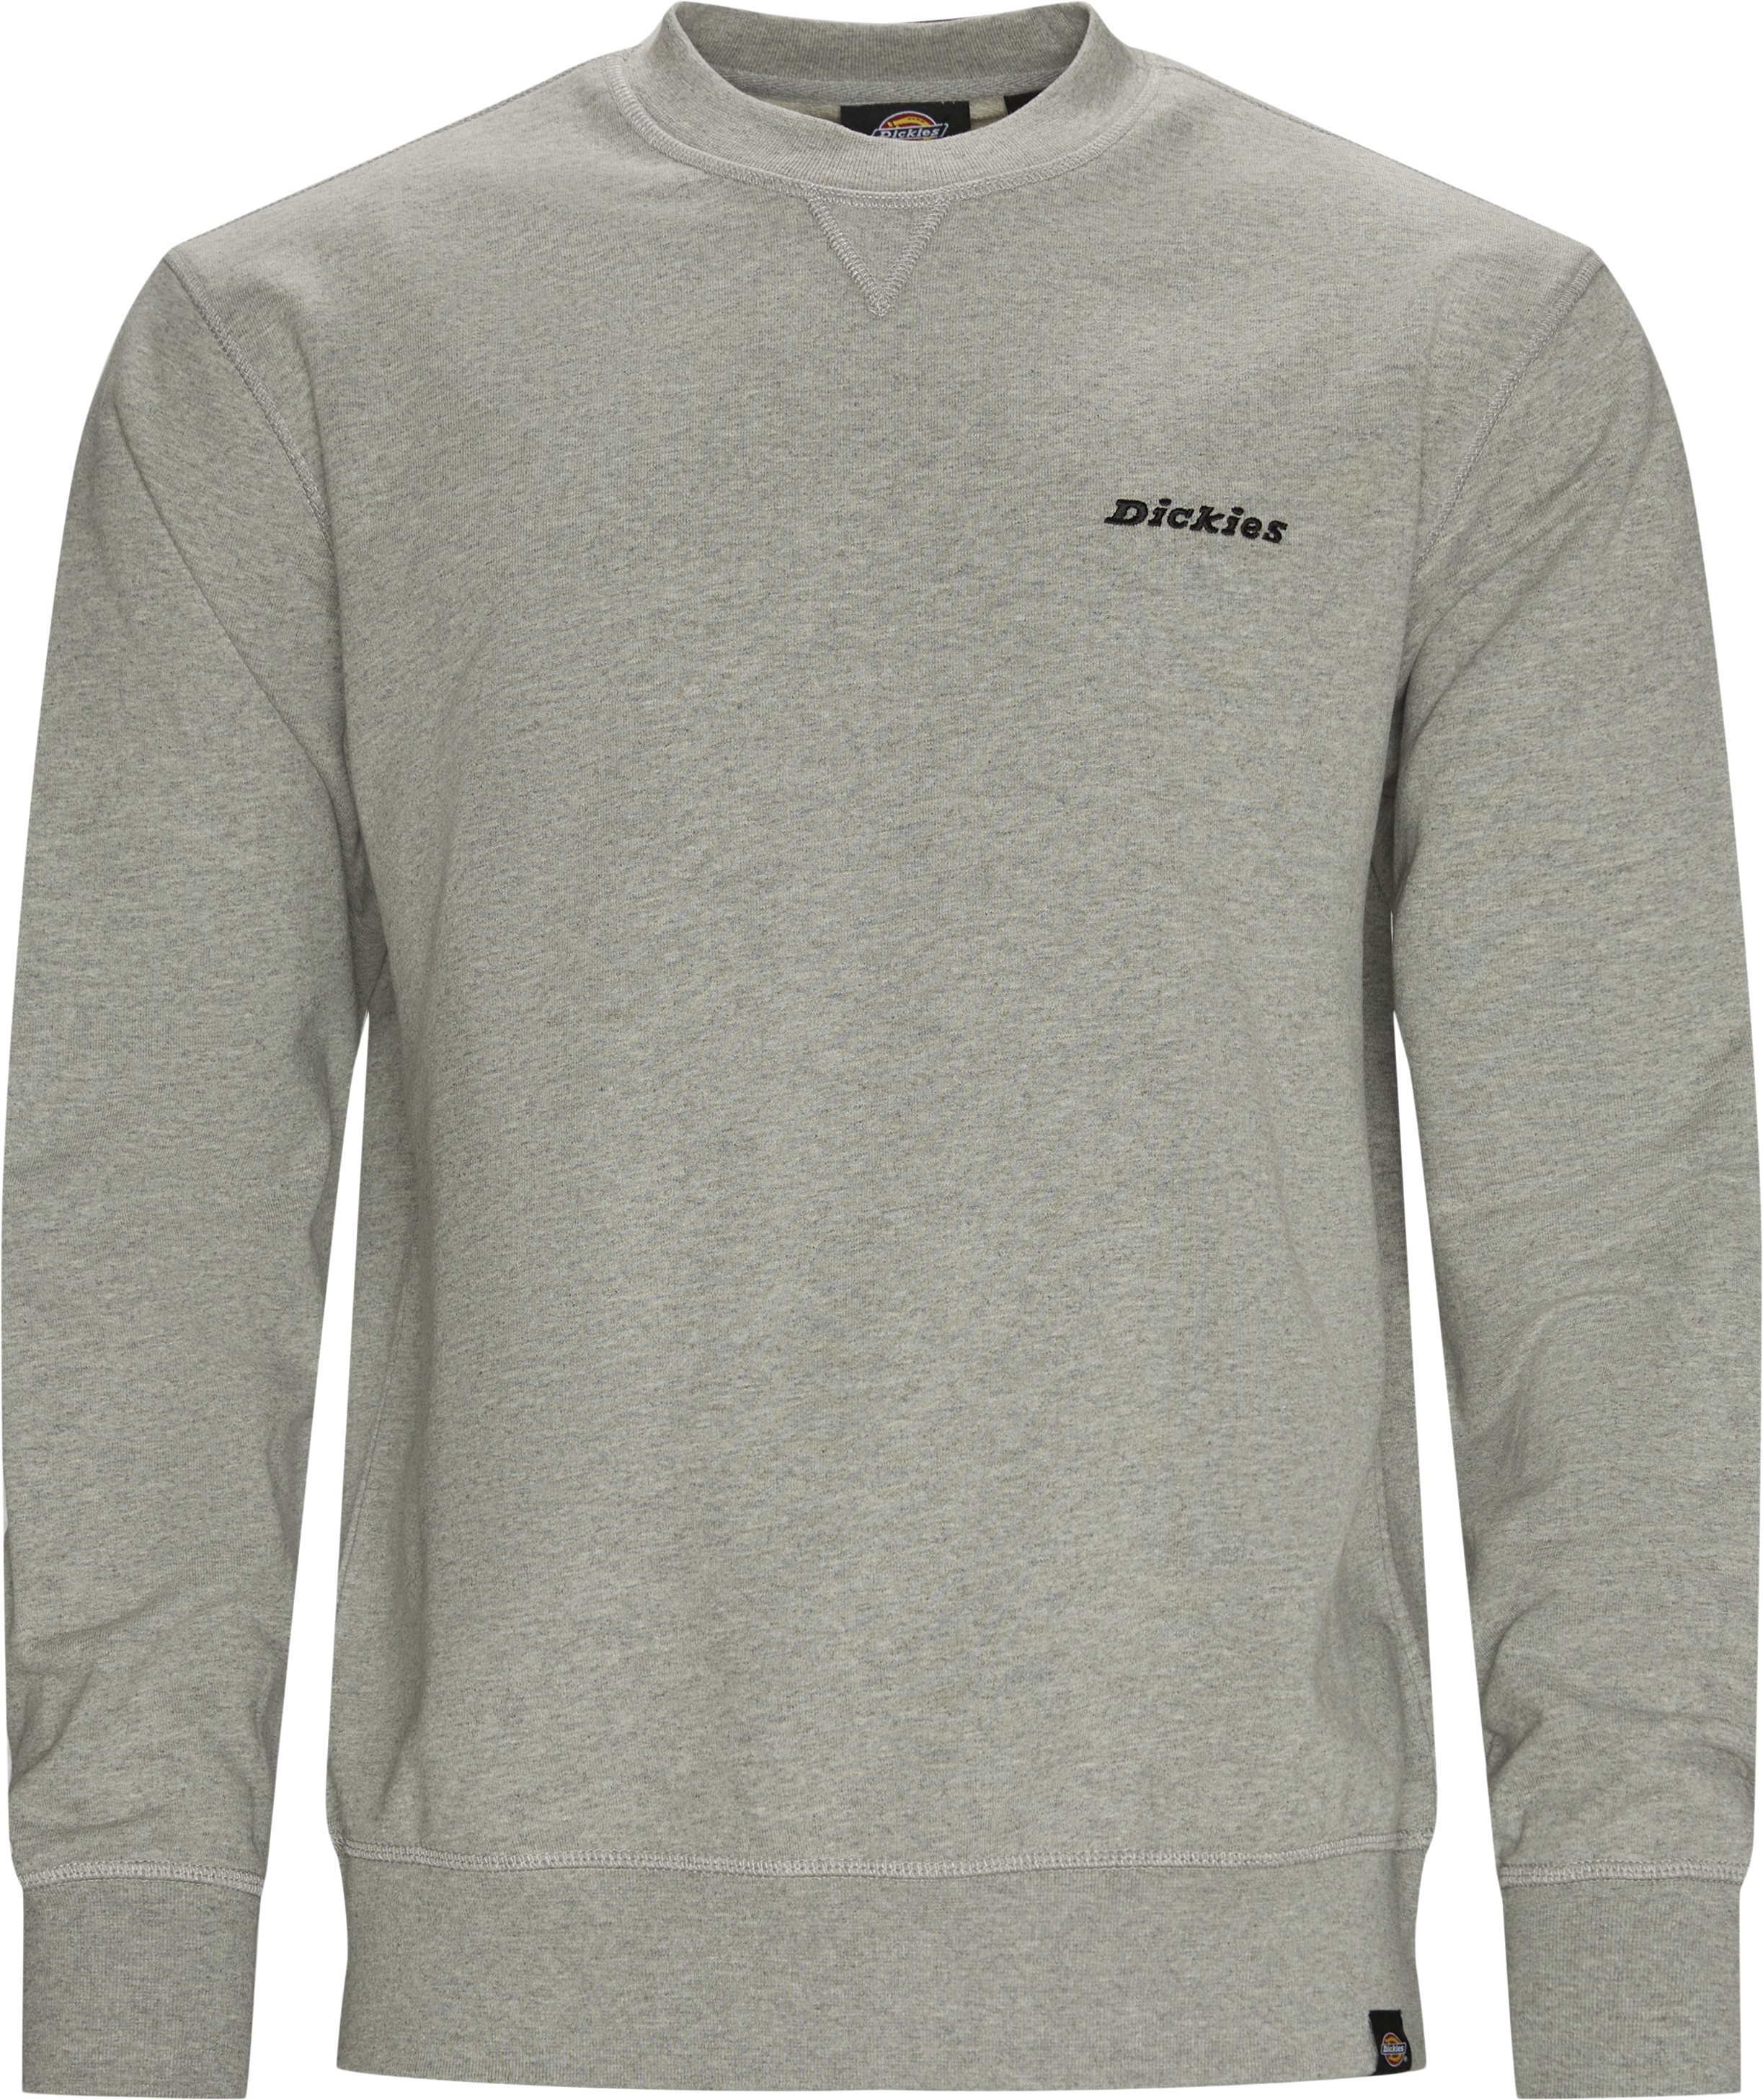 Loretteo Crew - Sweatshirts - Regular fit - Grey